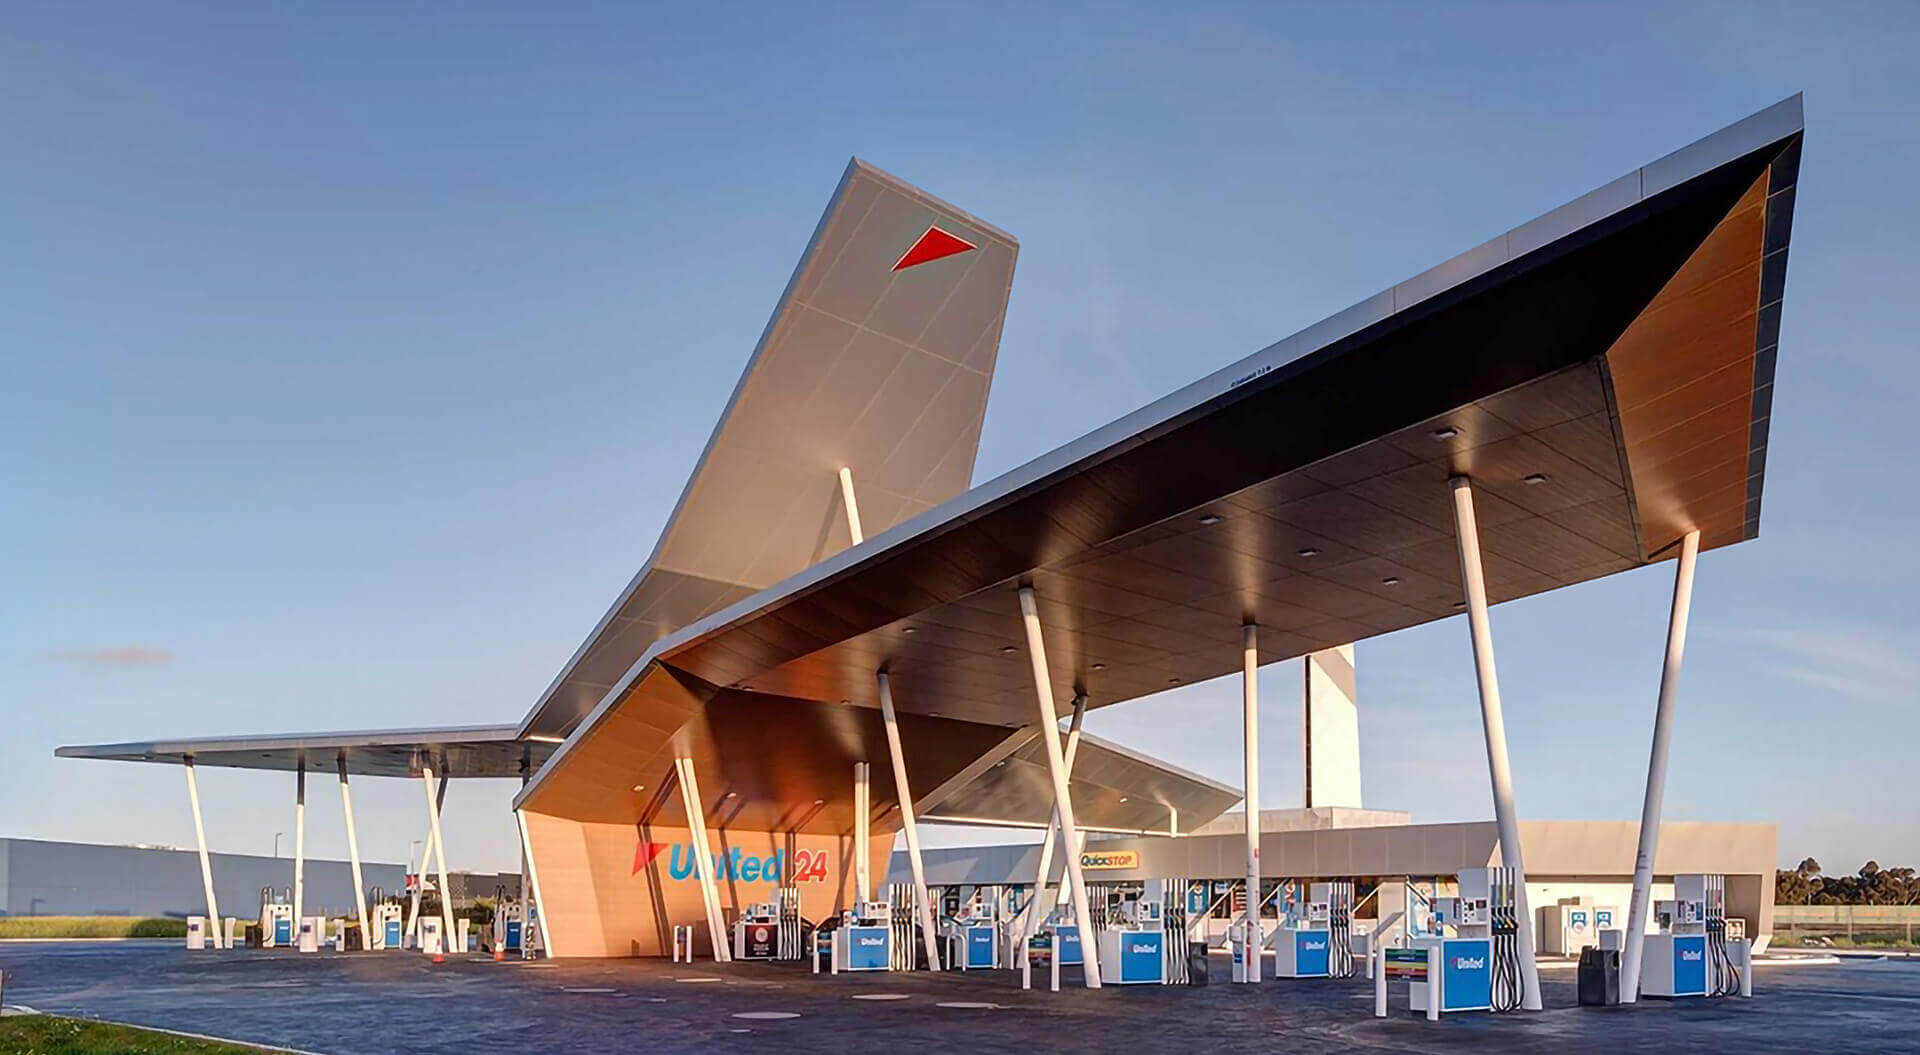 United 24 Petrol Forecourt Benchmark, Innovative Architecture, Canopy Design, Victoria Australia 2017 - CampbellRigg Agency